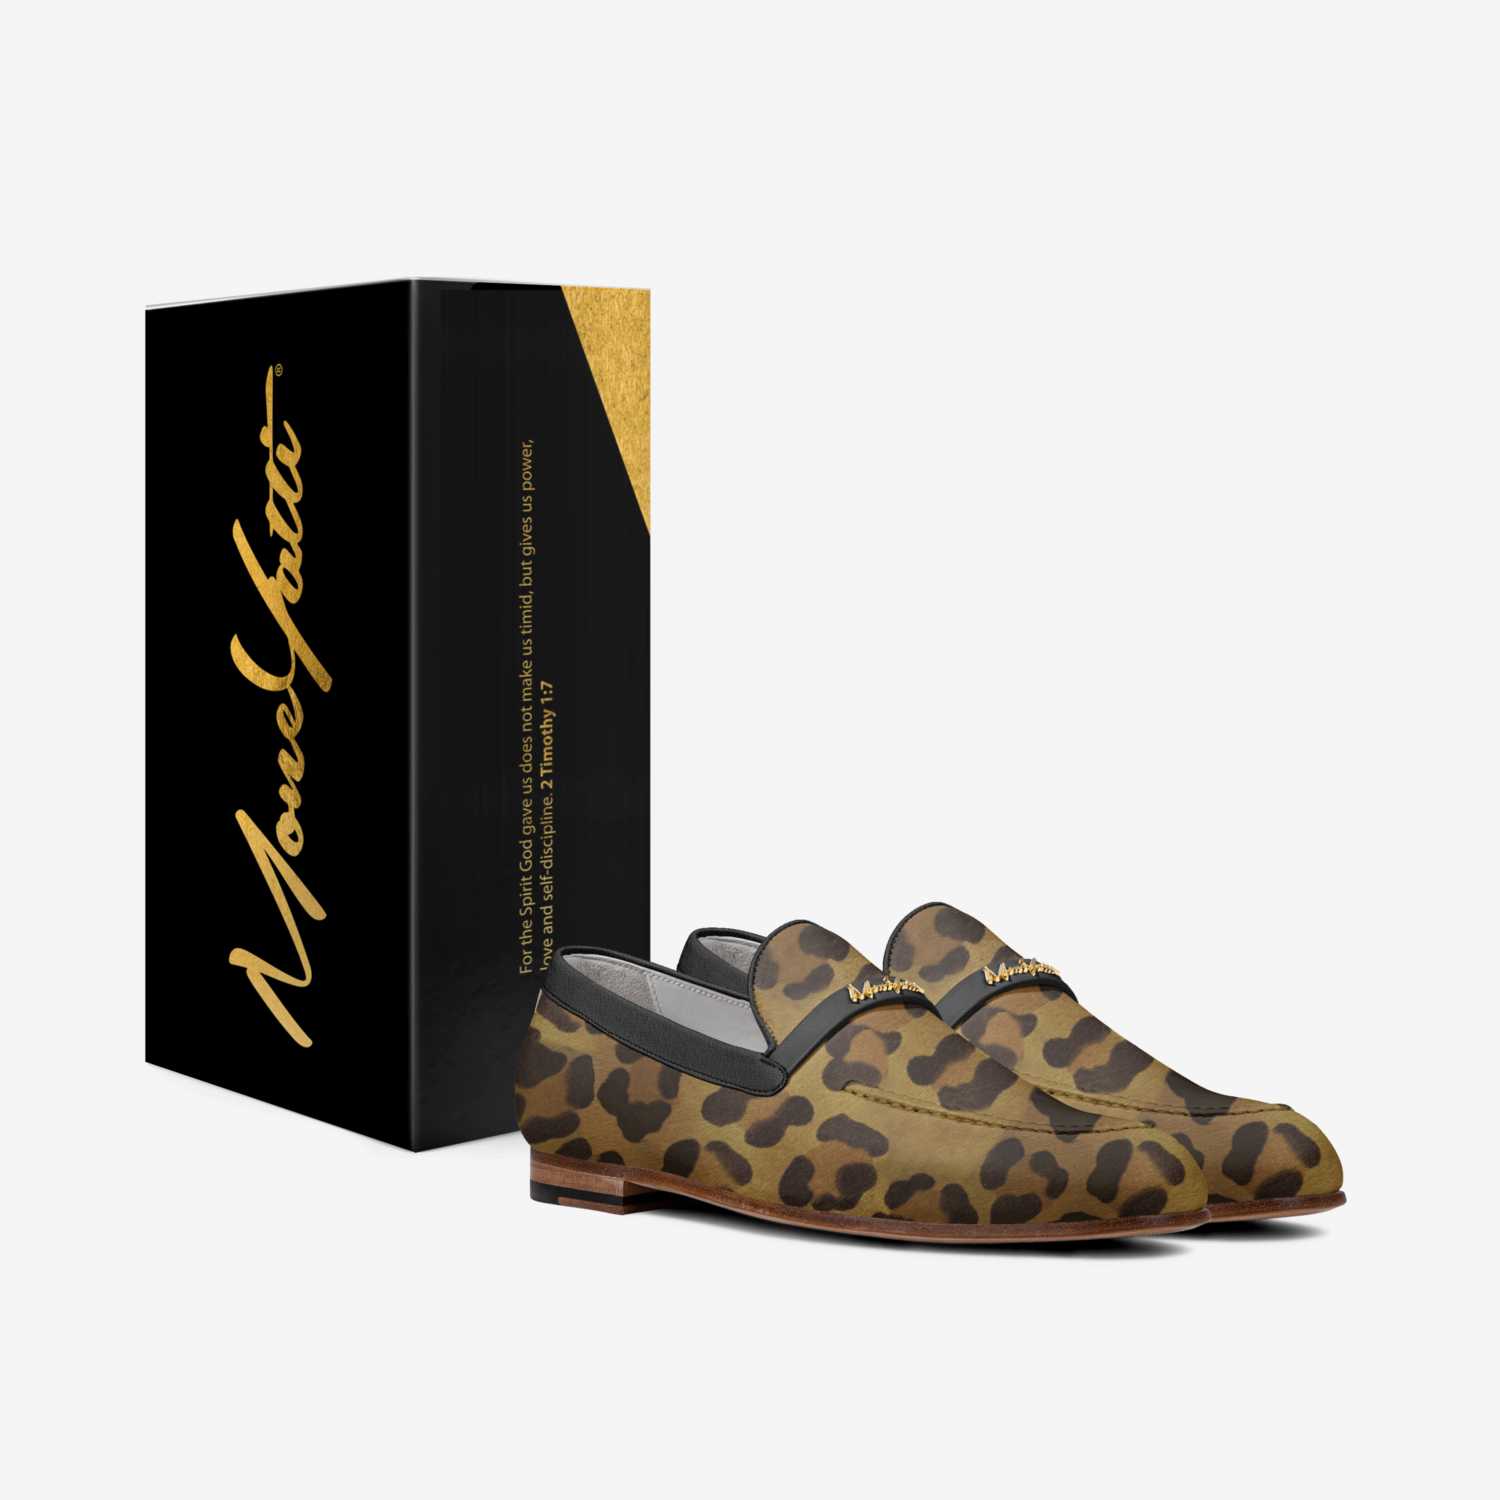 ElegantDrip 005 custom made in Italy shoes by Moneyatti Brand | Box view